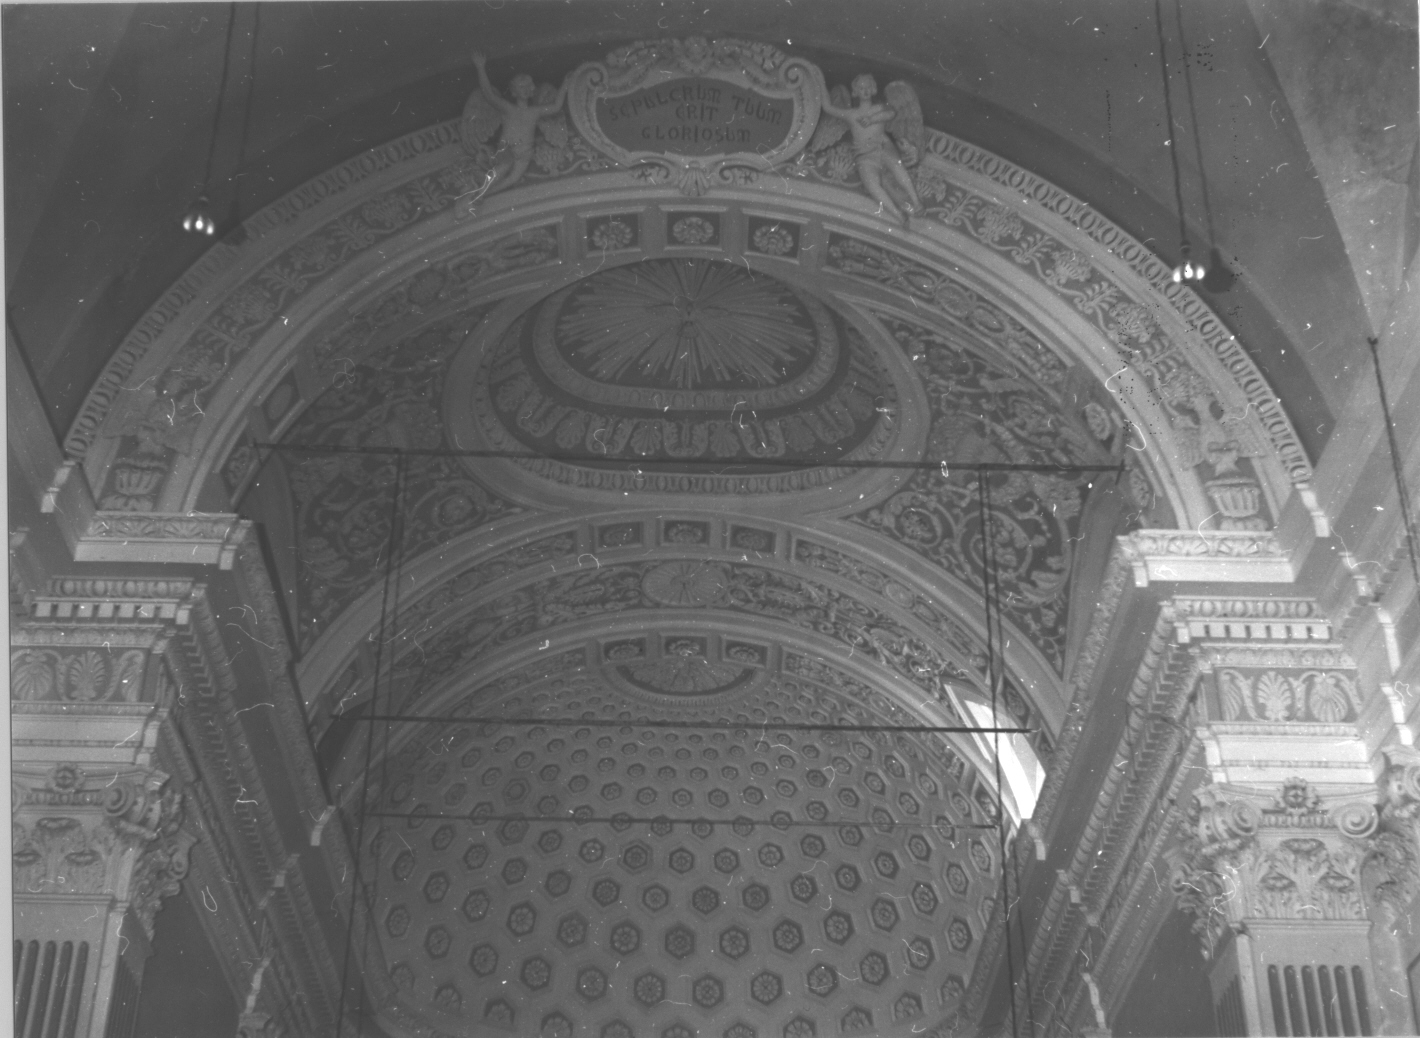 motivi decorativi a foglie d'acanto/ motivi decorativi geometrici (decorazione plastica, elemento d'insieme) di Scala Giovanni (sec. XIX)